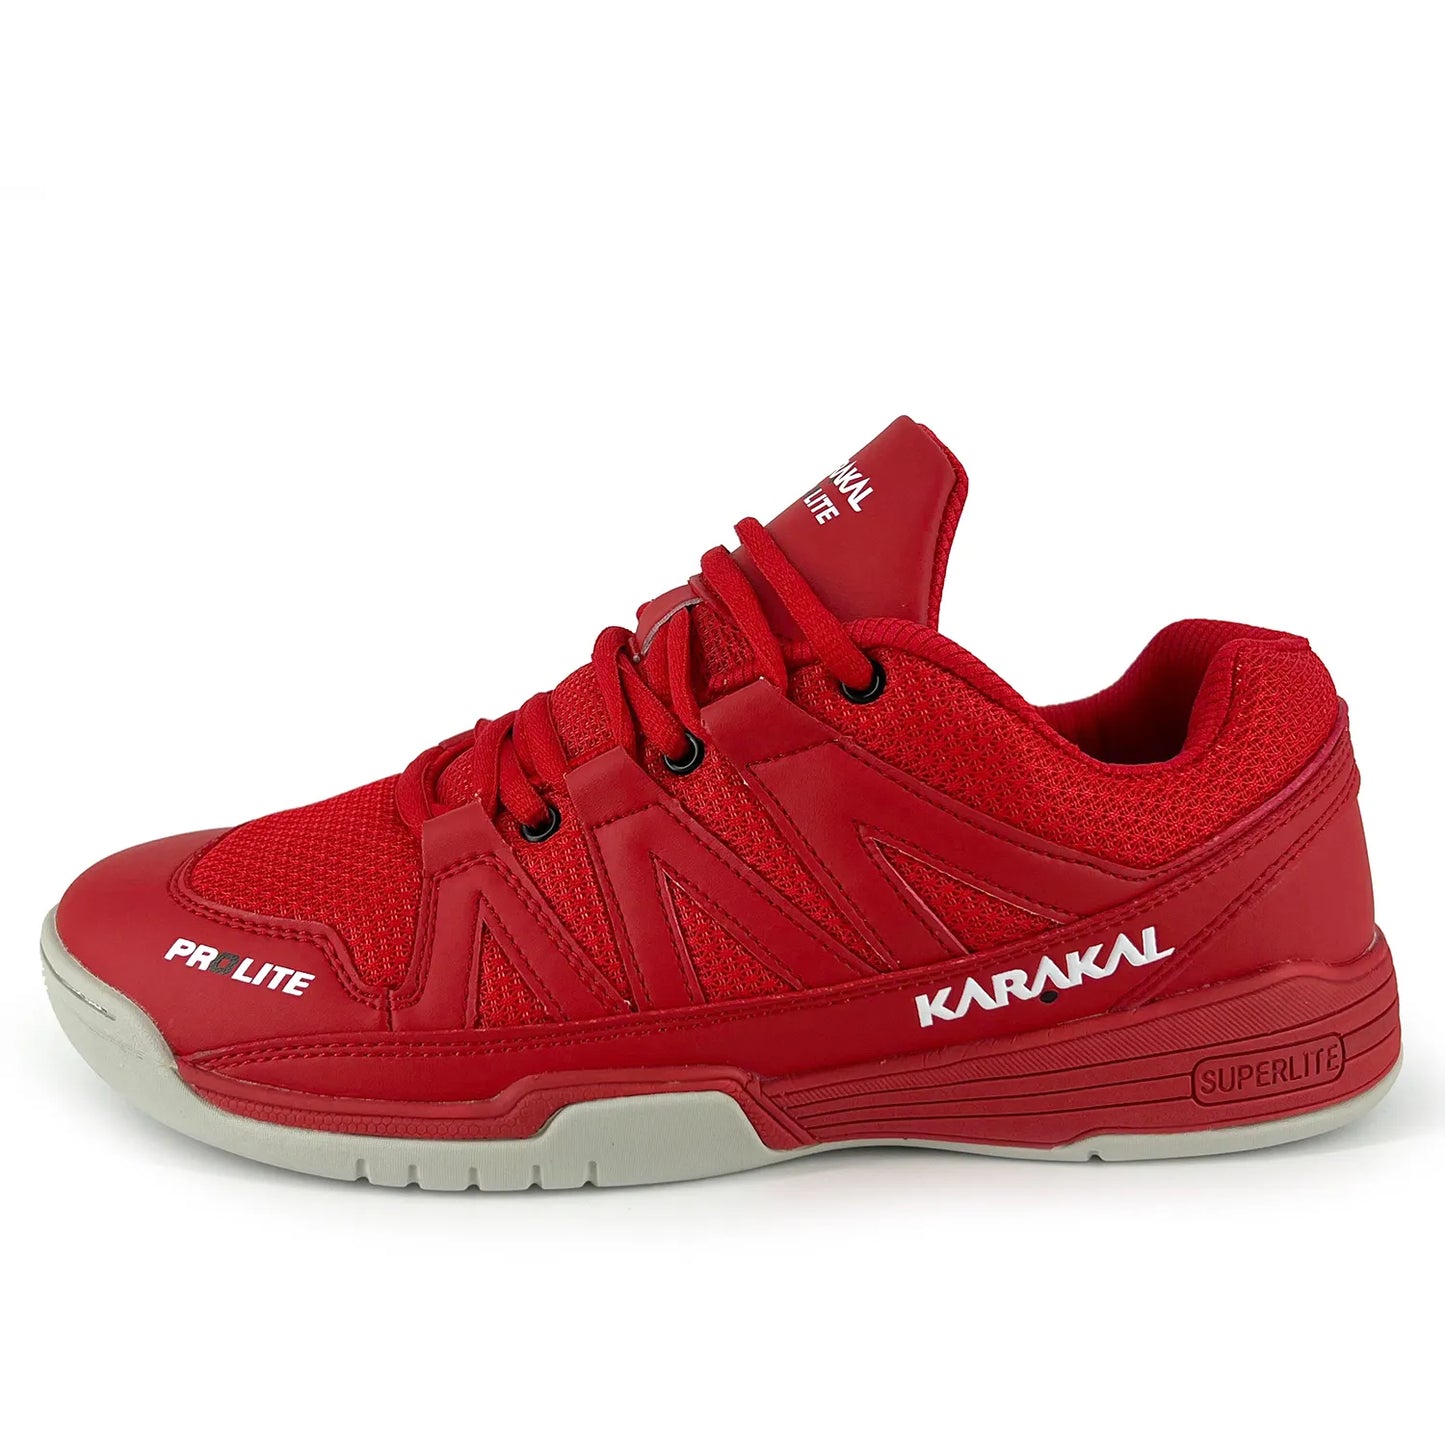 Karakal KF ProLite Court Shoe in Red